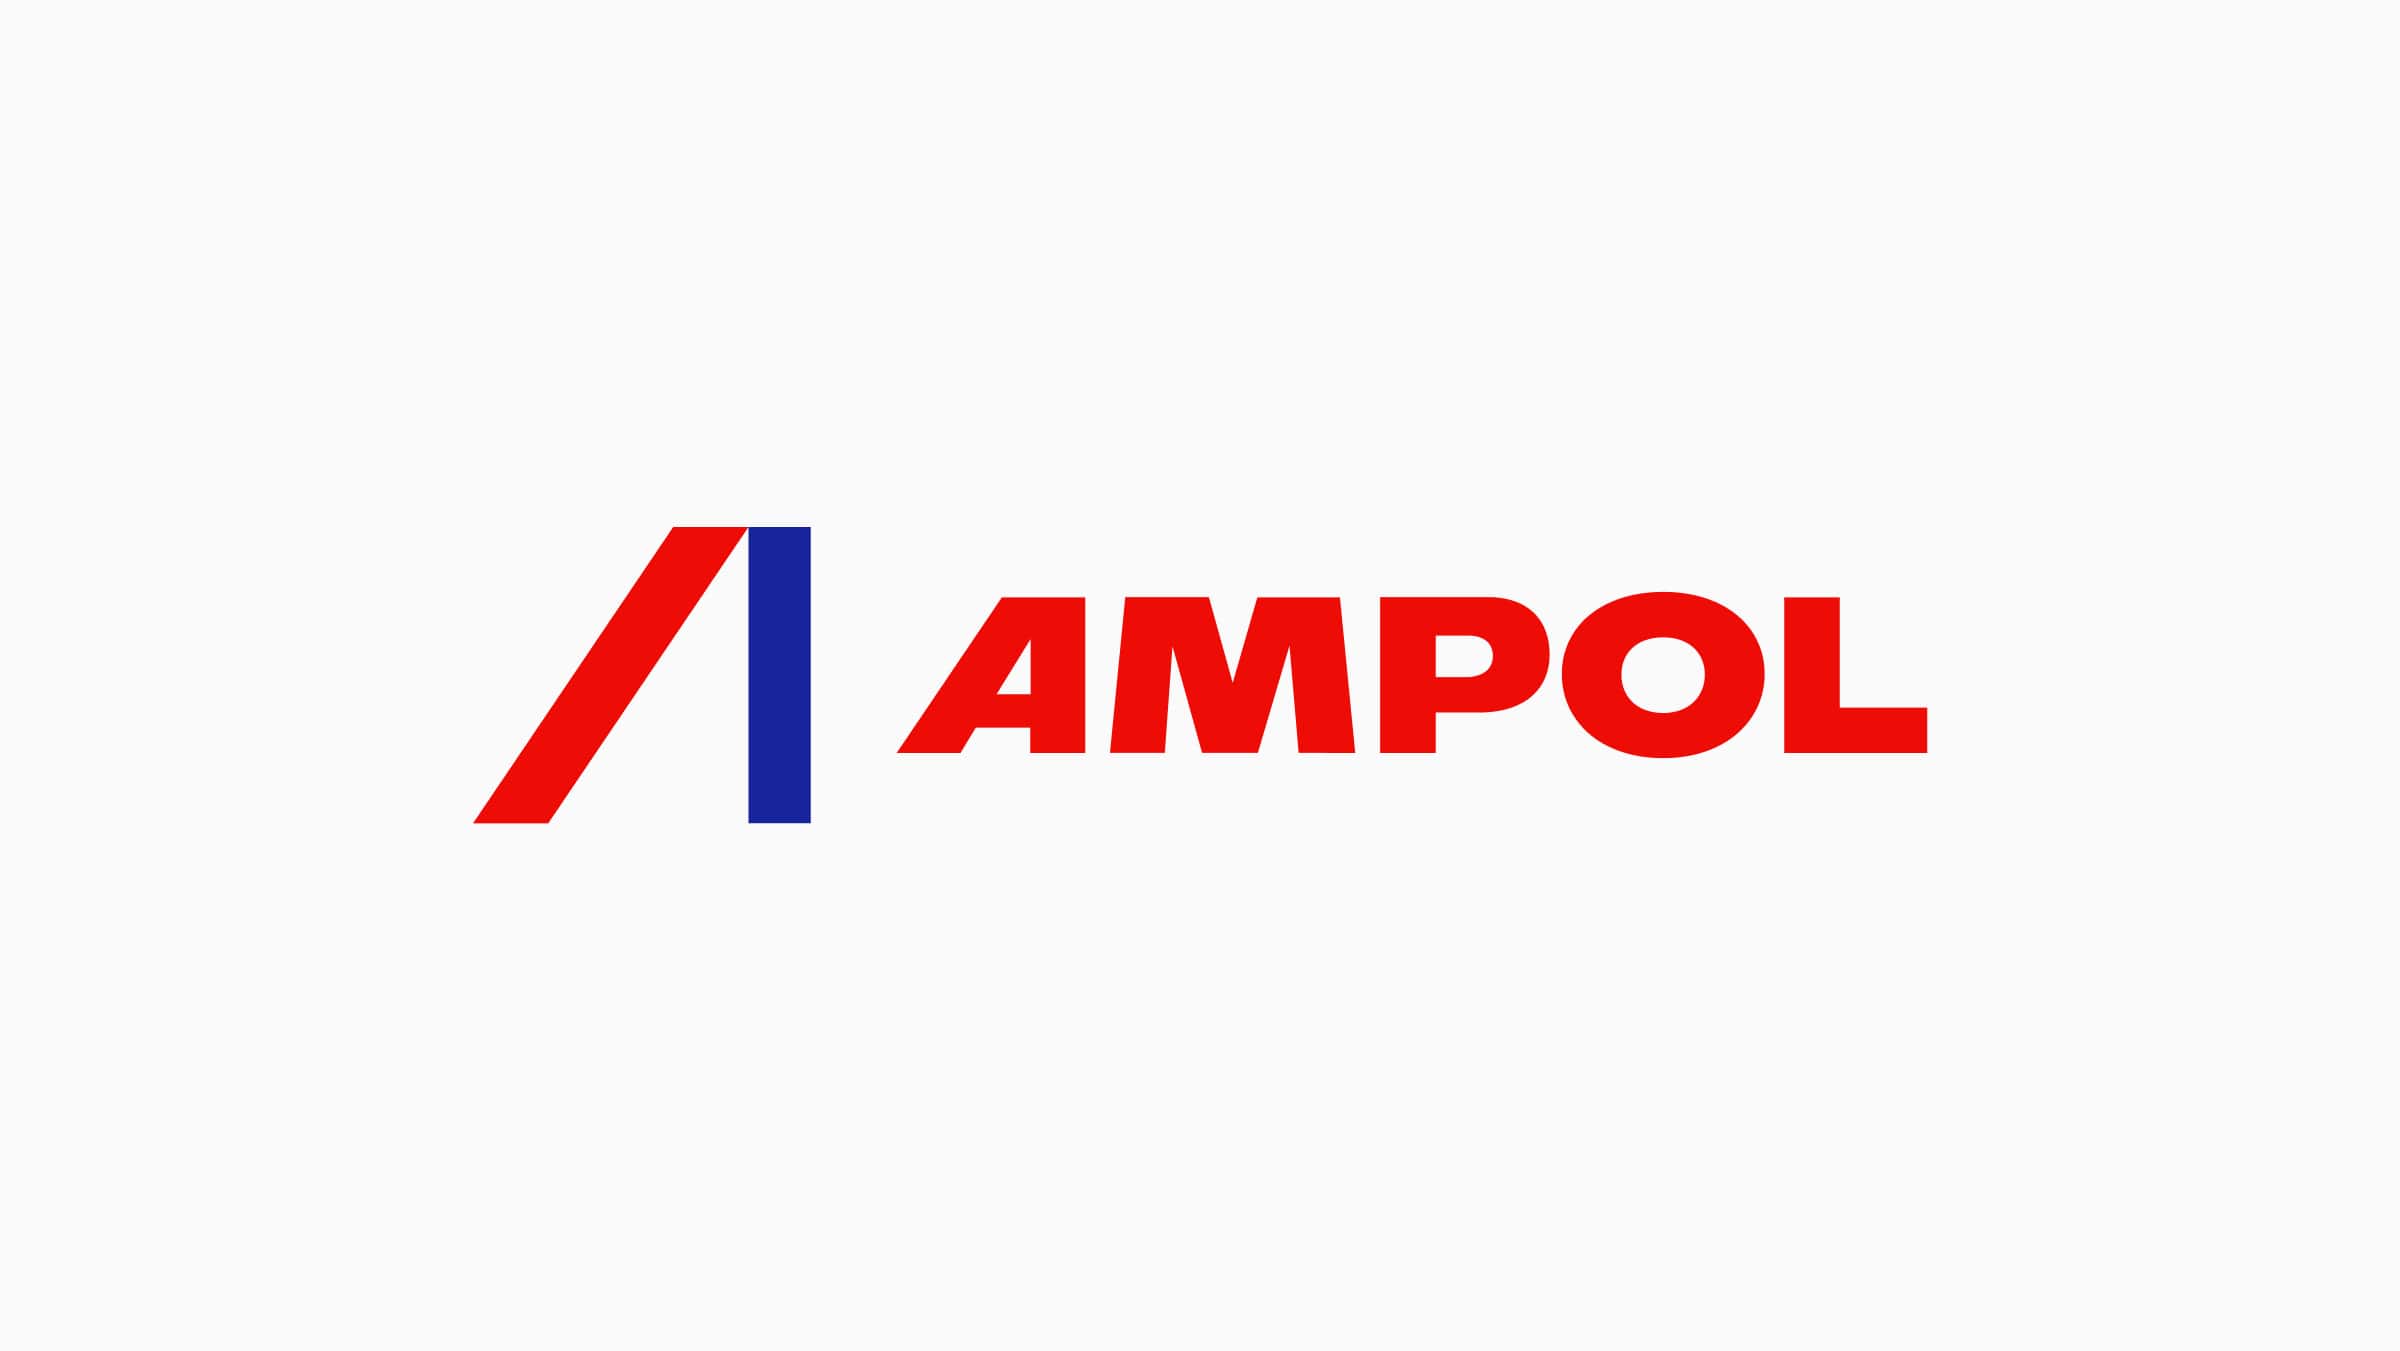 The Ampol logo